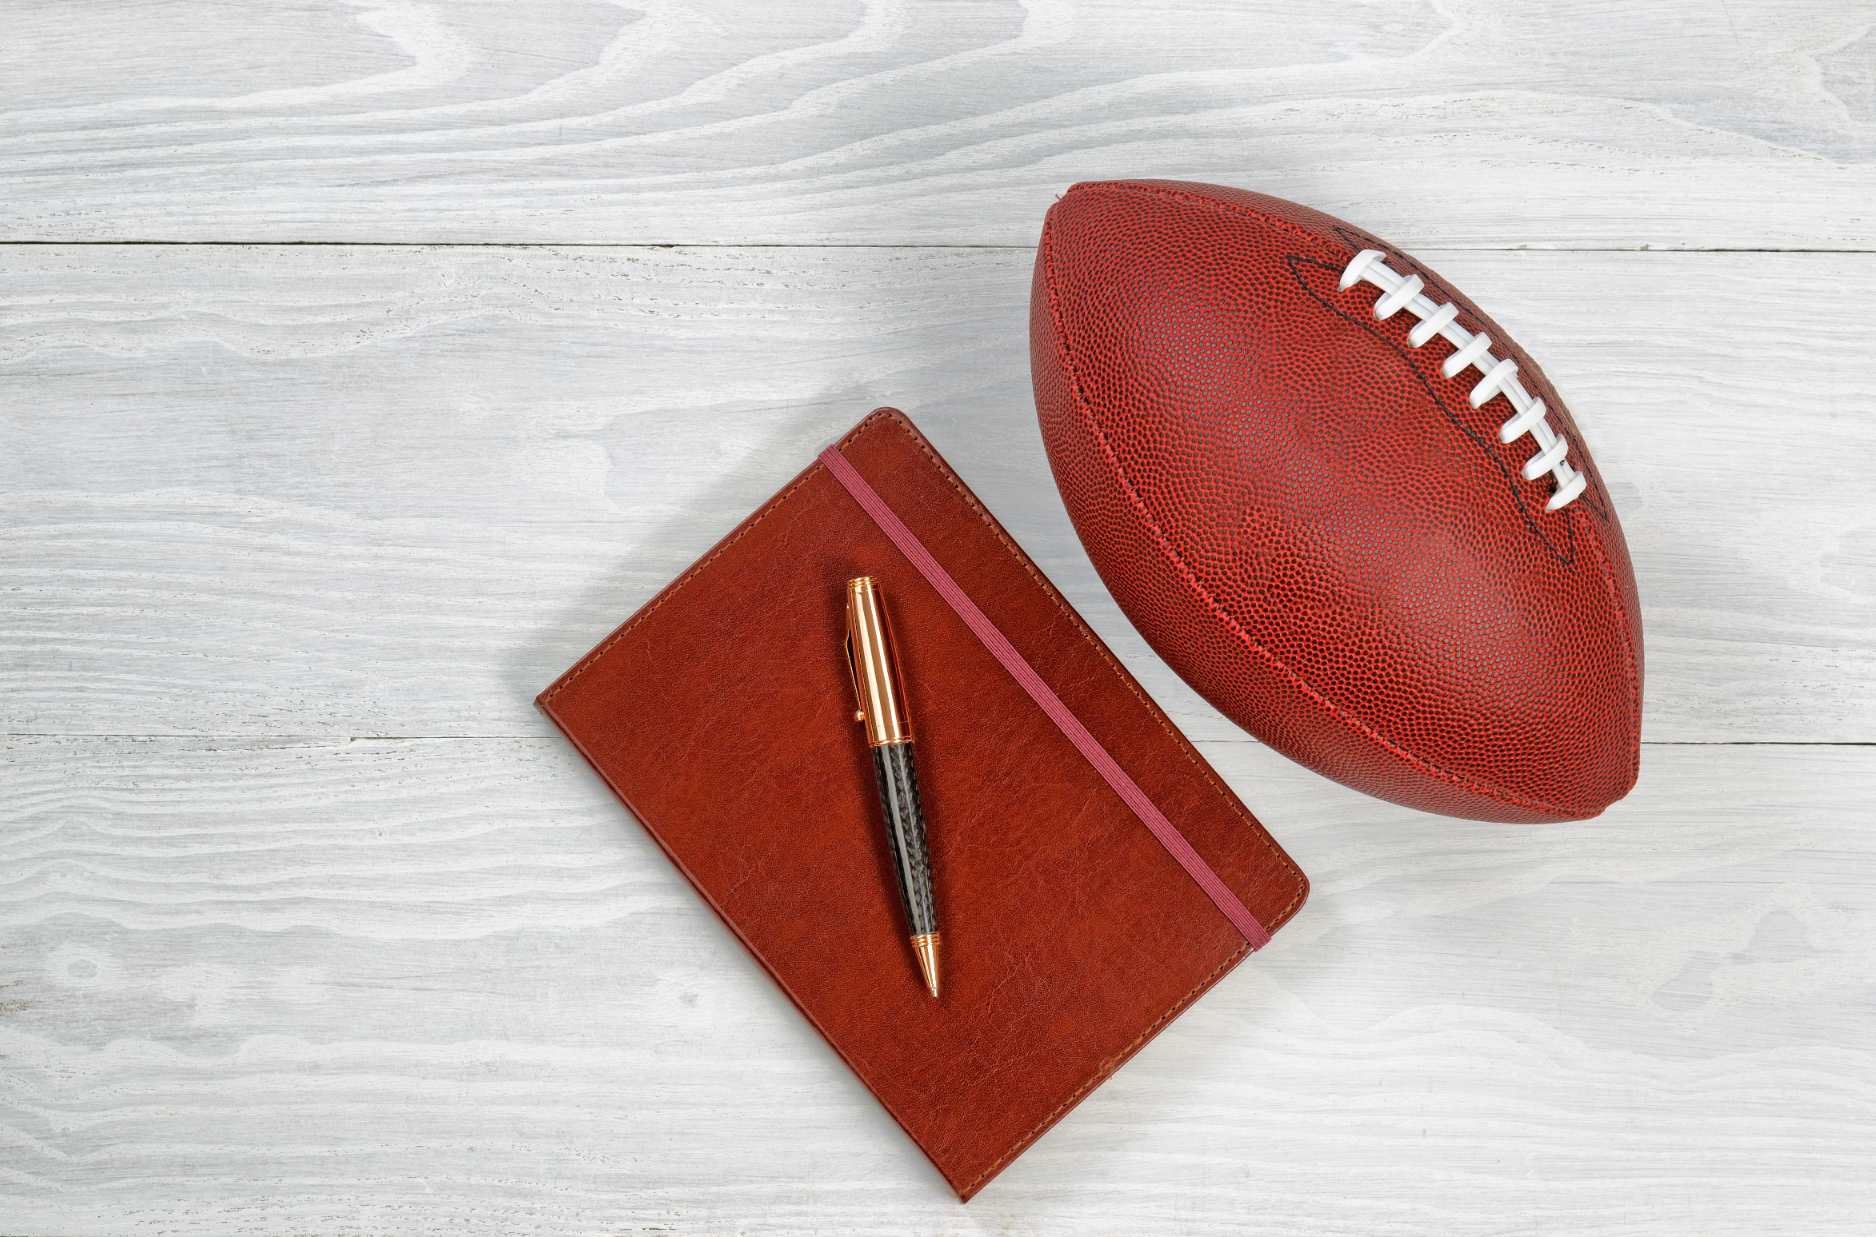 football and notepad